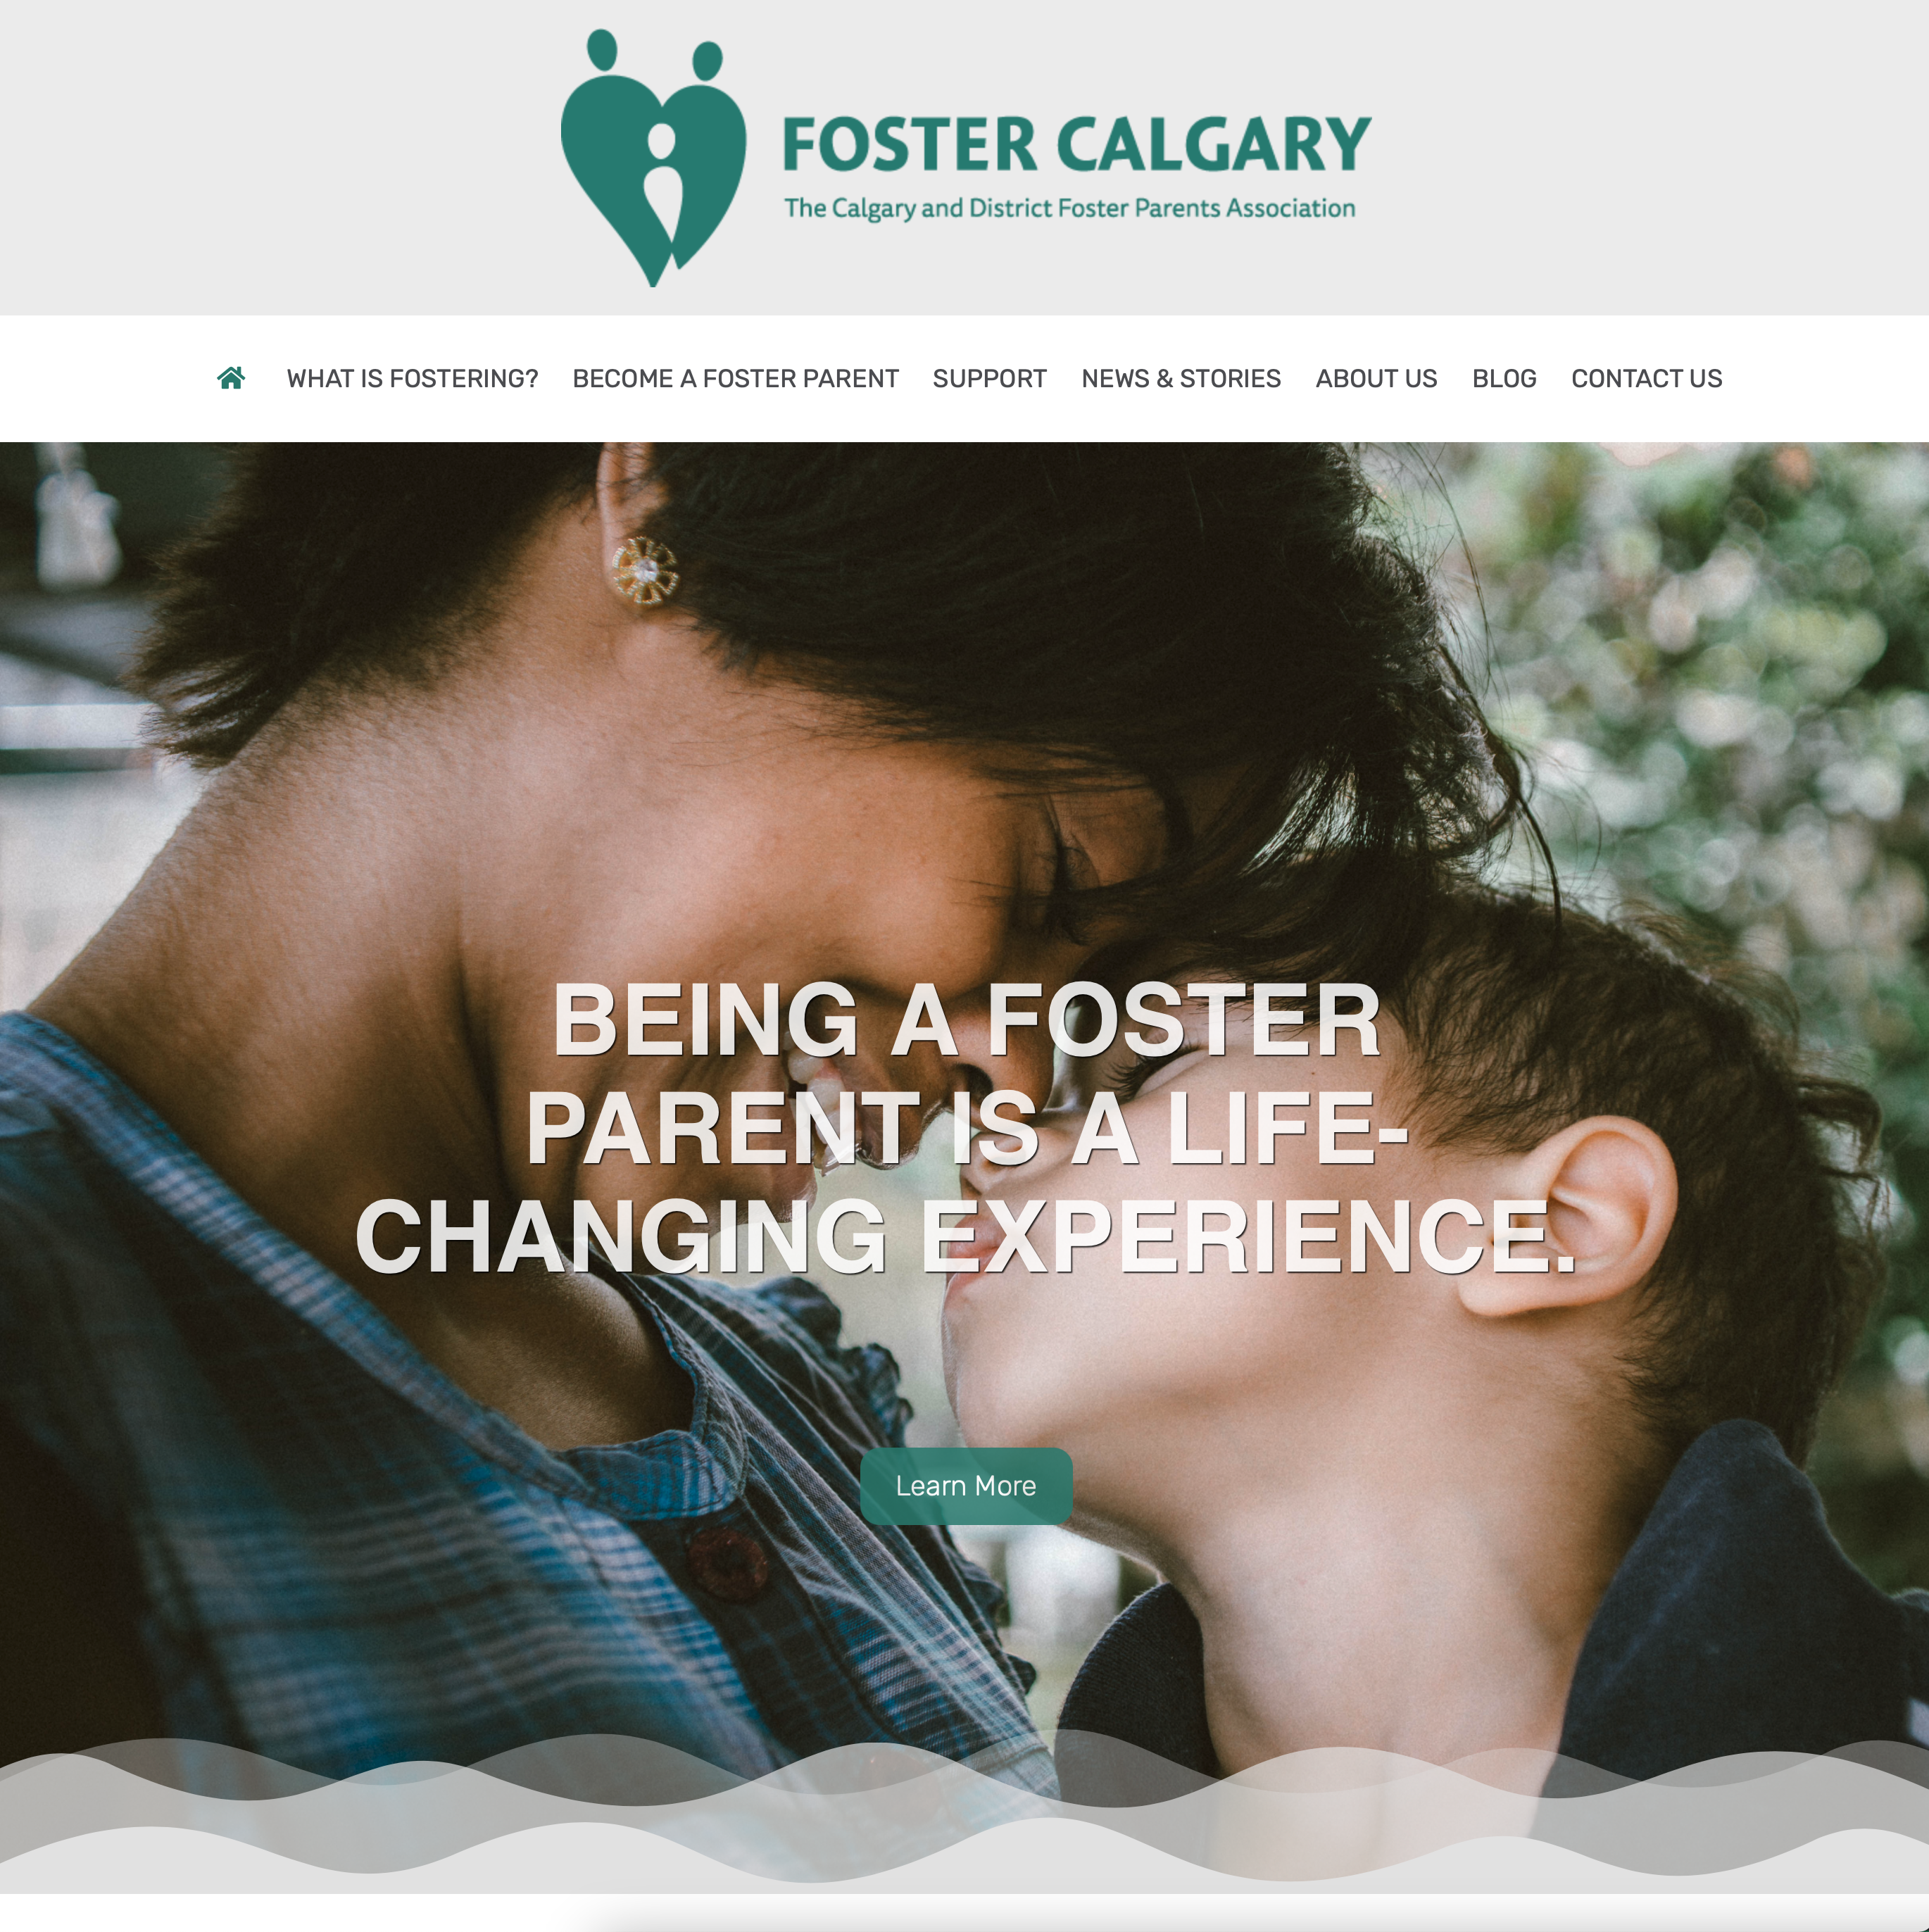 Foster Calgary